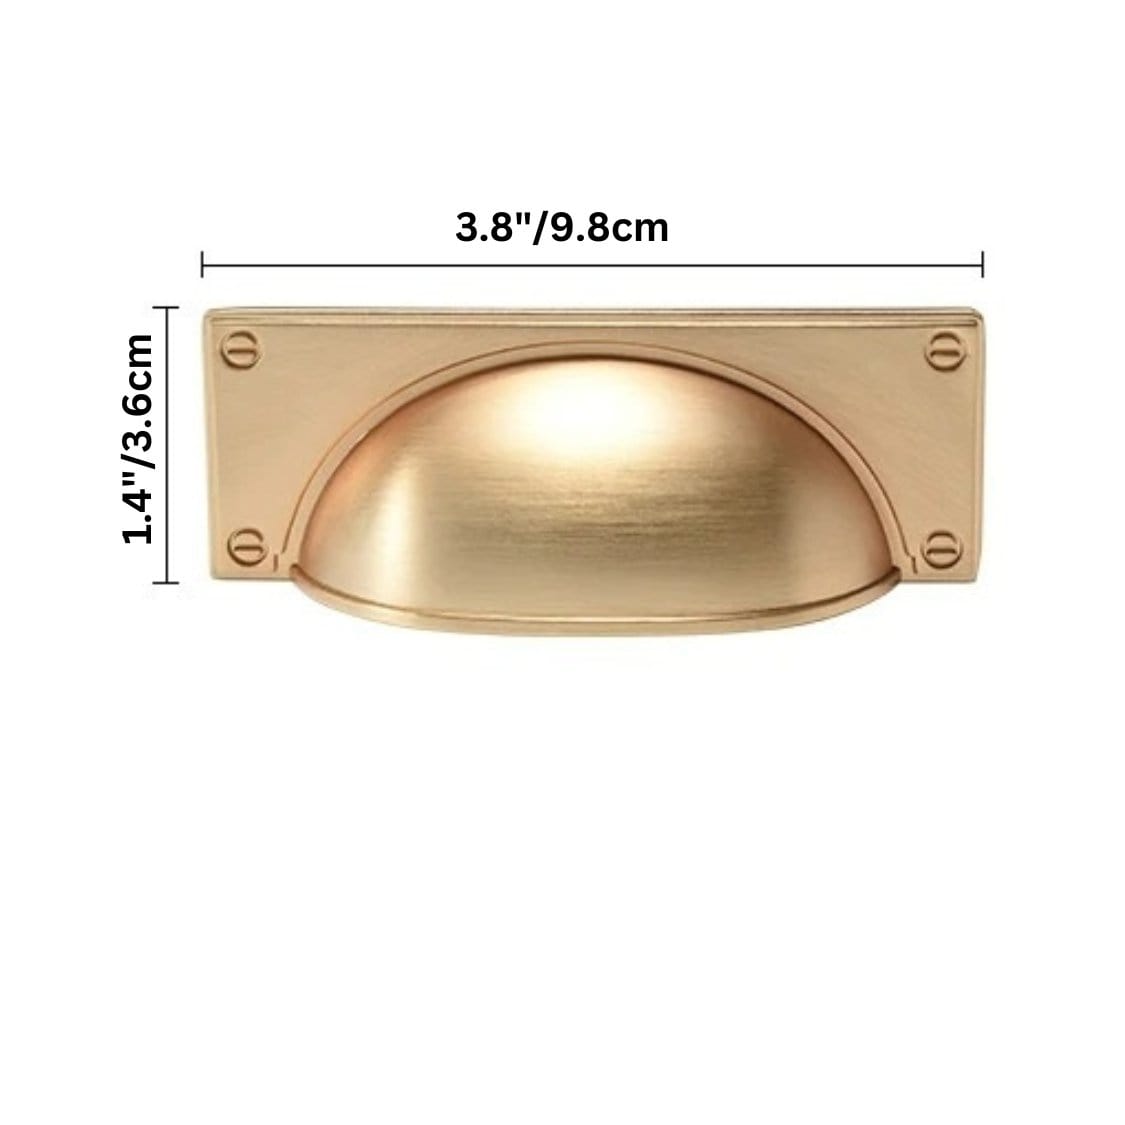 Residence Supply Drawer Pull: 3.8" x 1.4" / 9.8 x 3.6cm / Light Cadmea Knob & Pull Bar